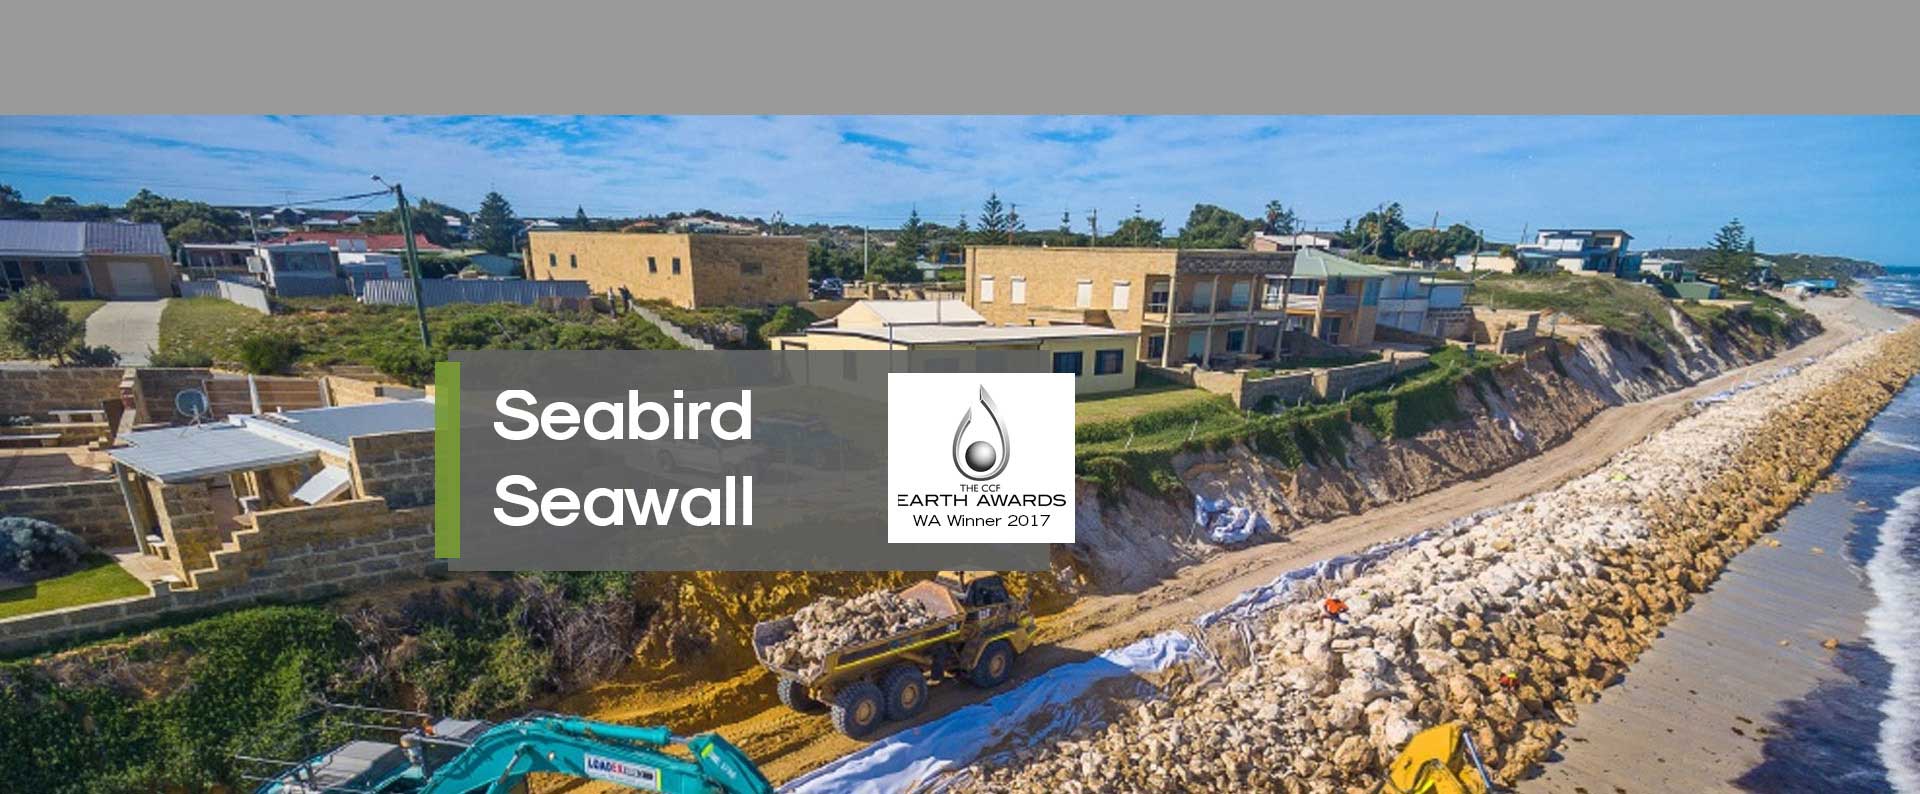 Seabird Seawall